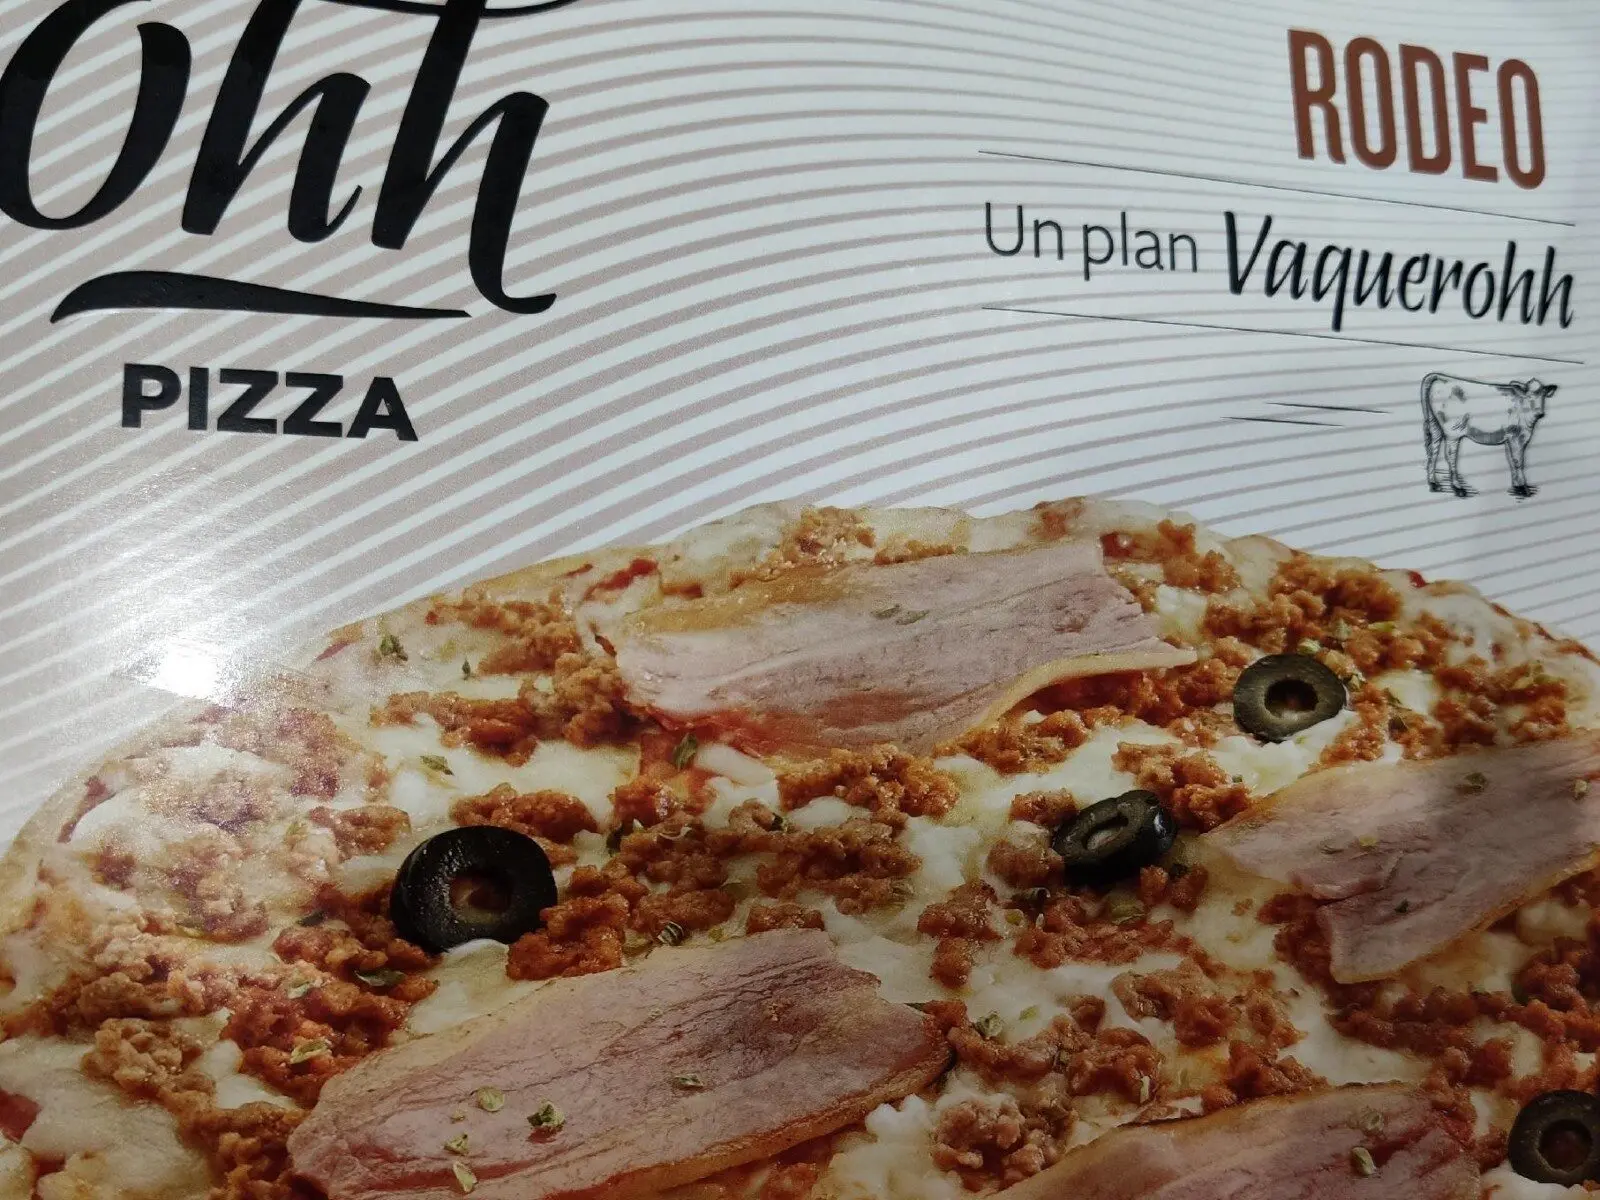 pizza rodeo ingredientes - Qué lleva la pizza rodeo